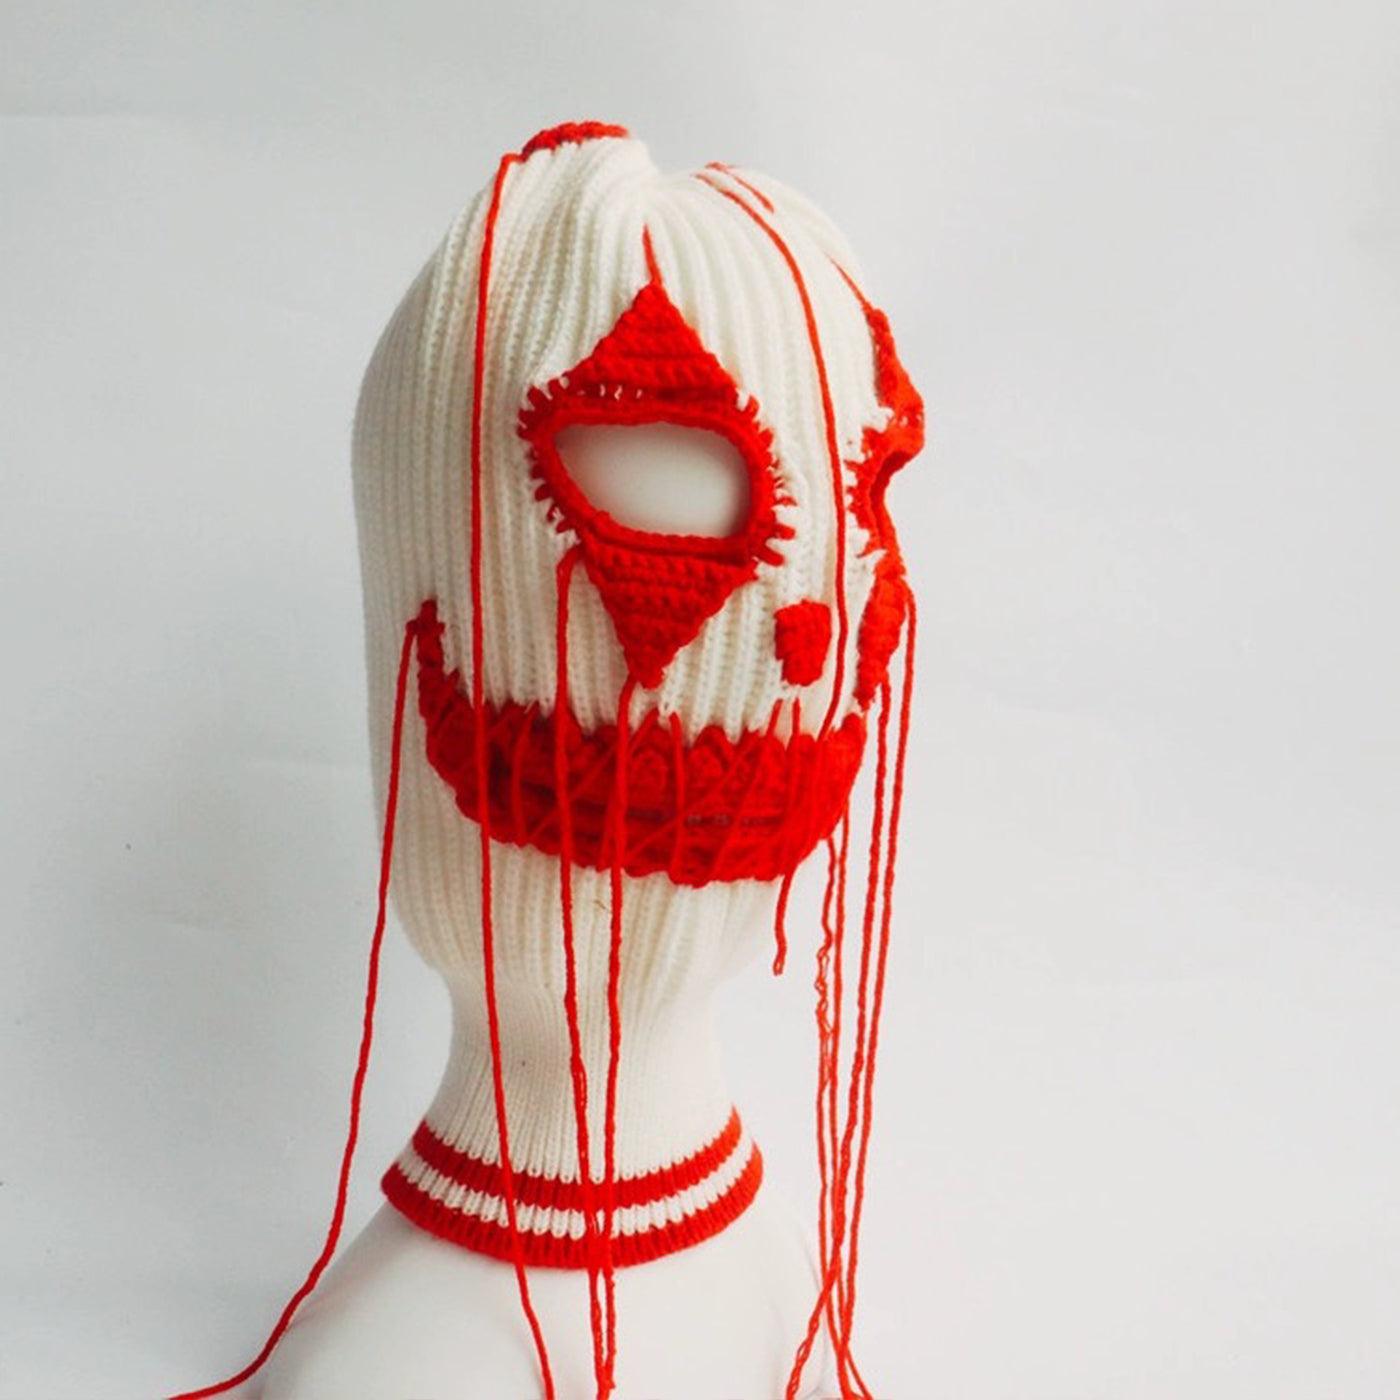 Mesmerizing Glow Yarn Knitted Clown Head Mask - BlingBlingYarn